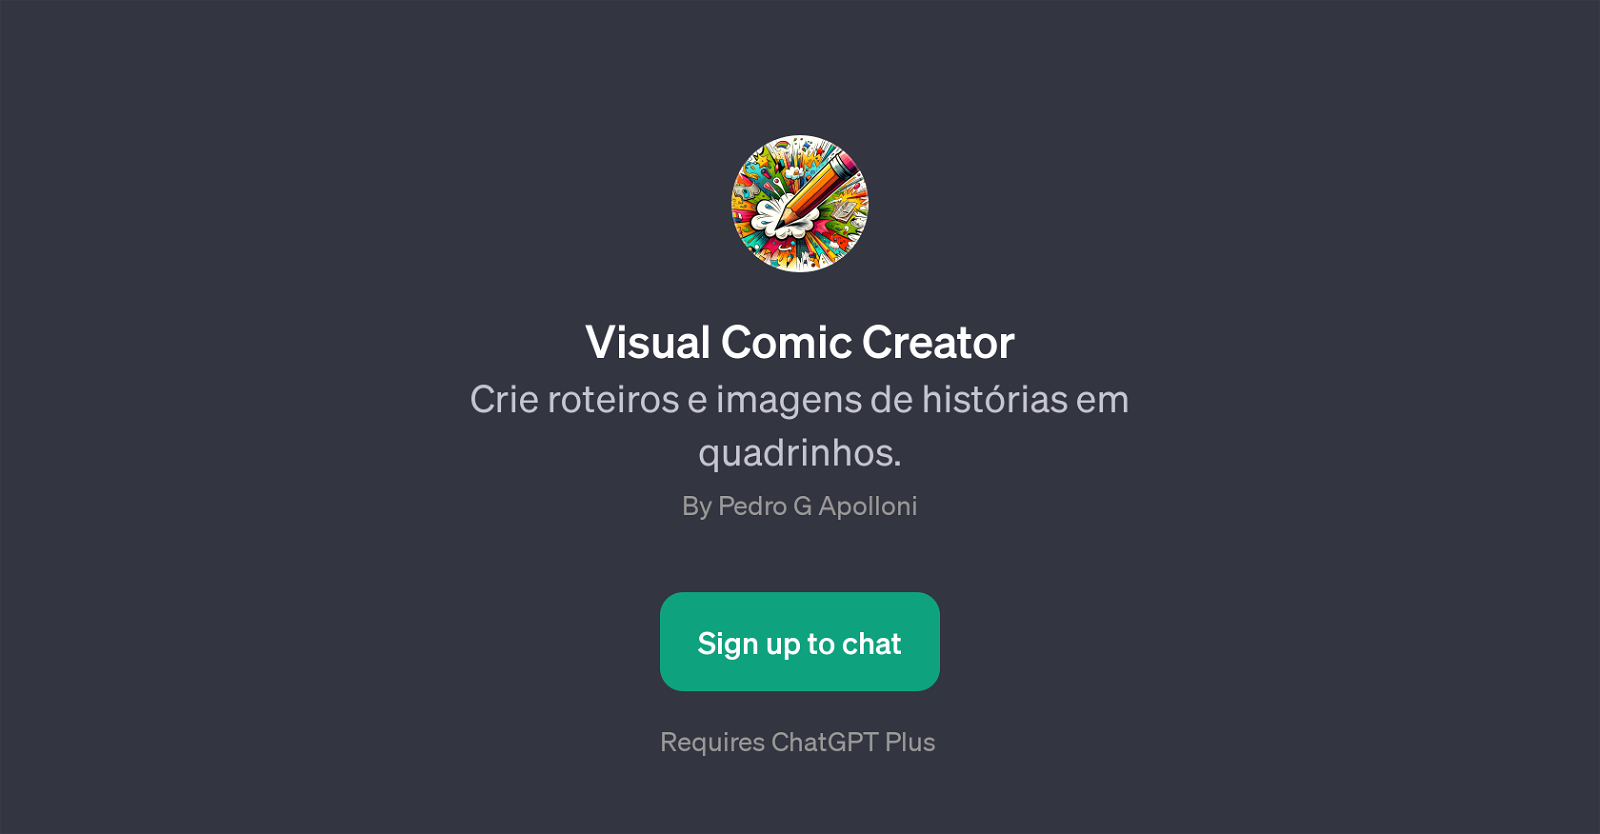 Visual Comic Creator website